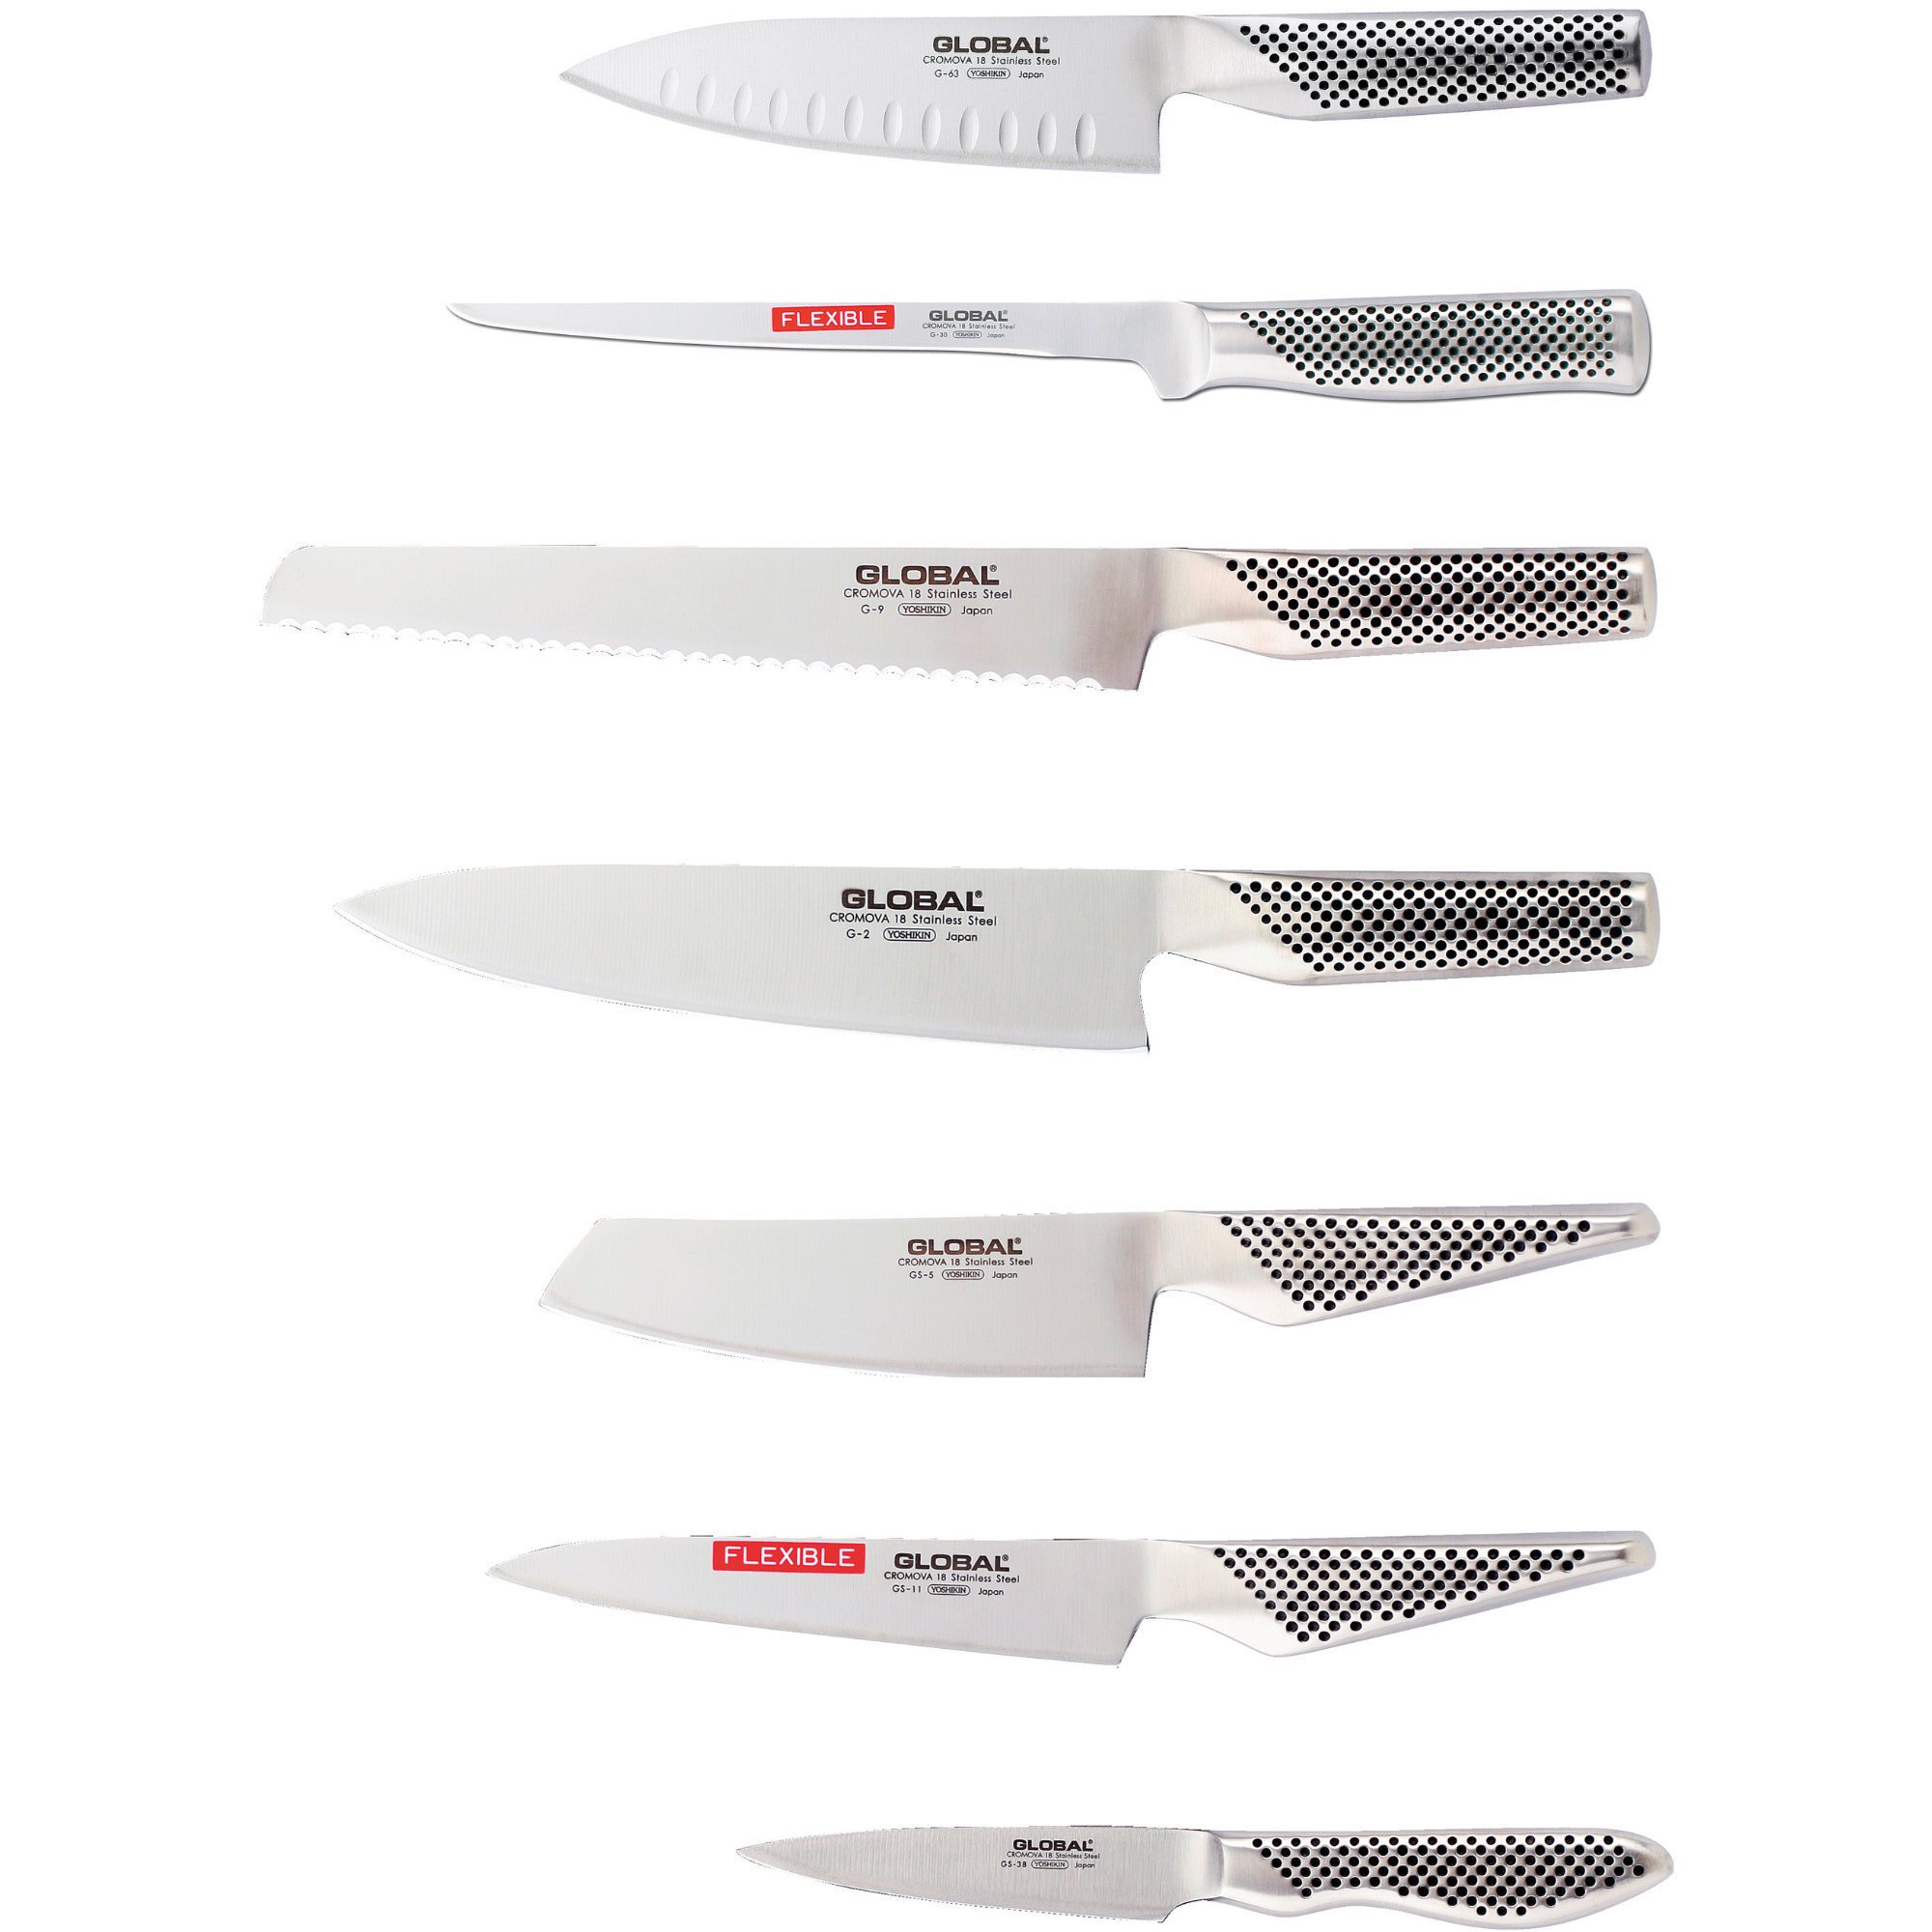 Global Knivsæt med 7 knive